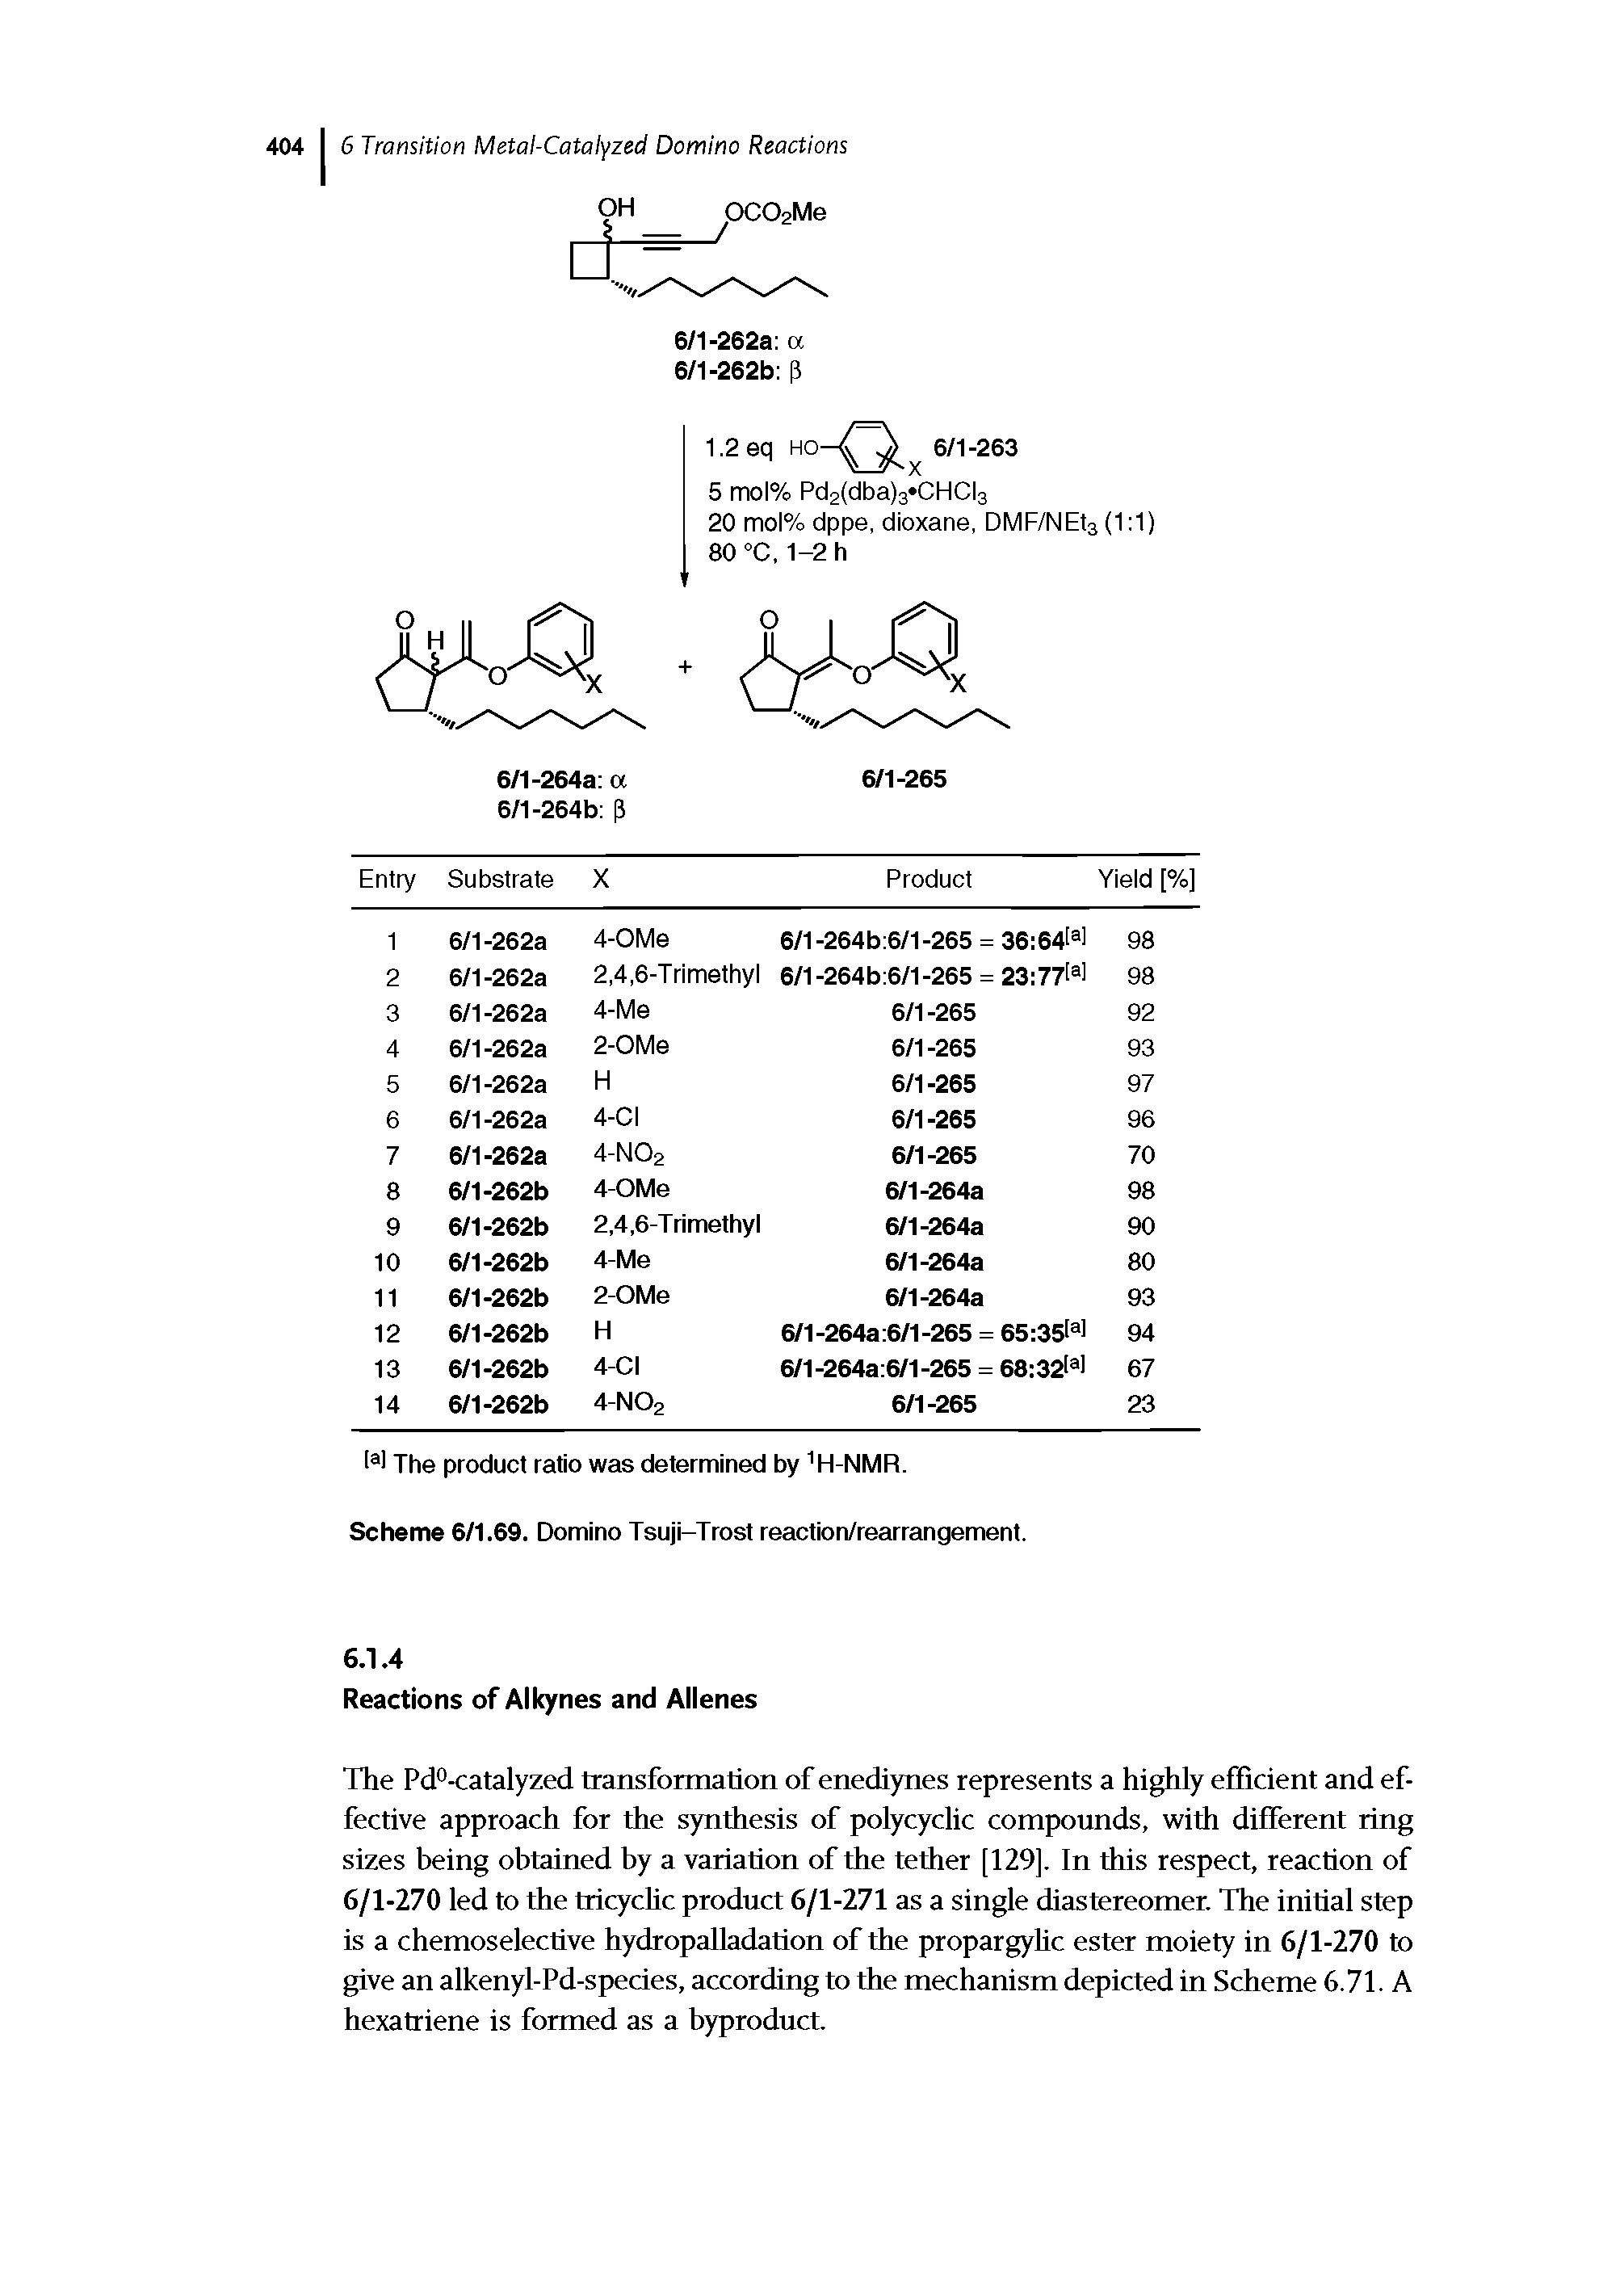 Scheme 6/1.69. Domino Tsuji-Trost reaction/rearrangement.